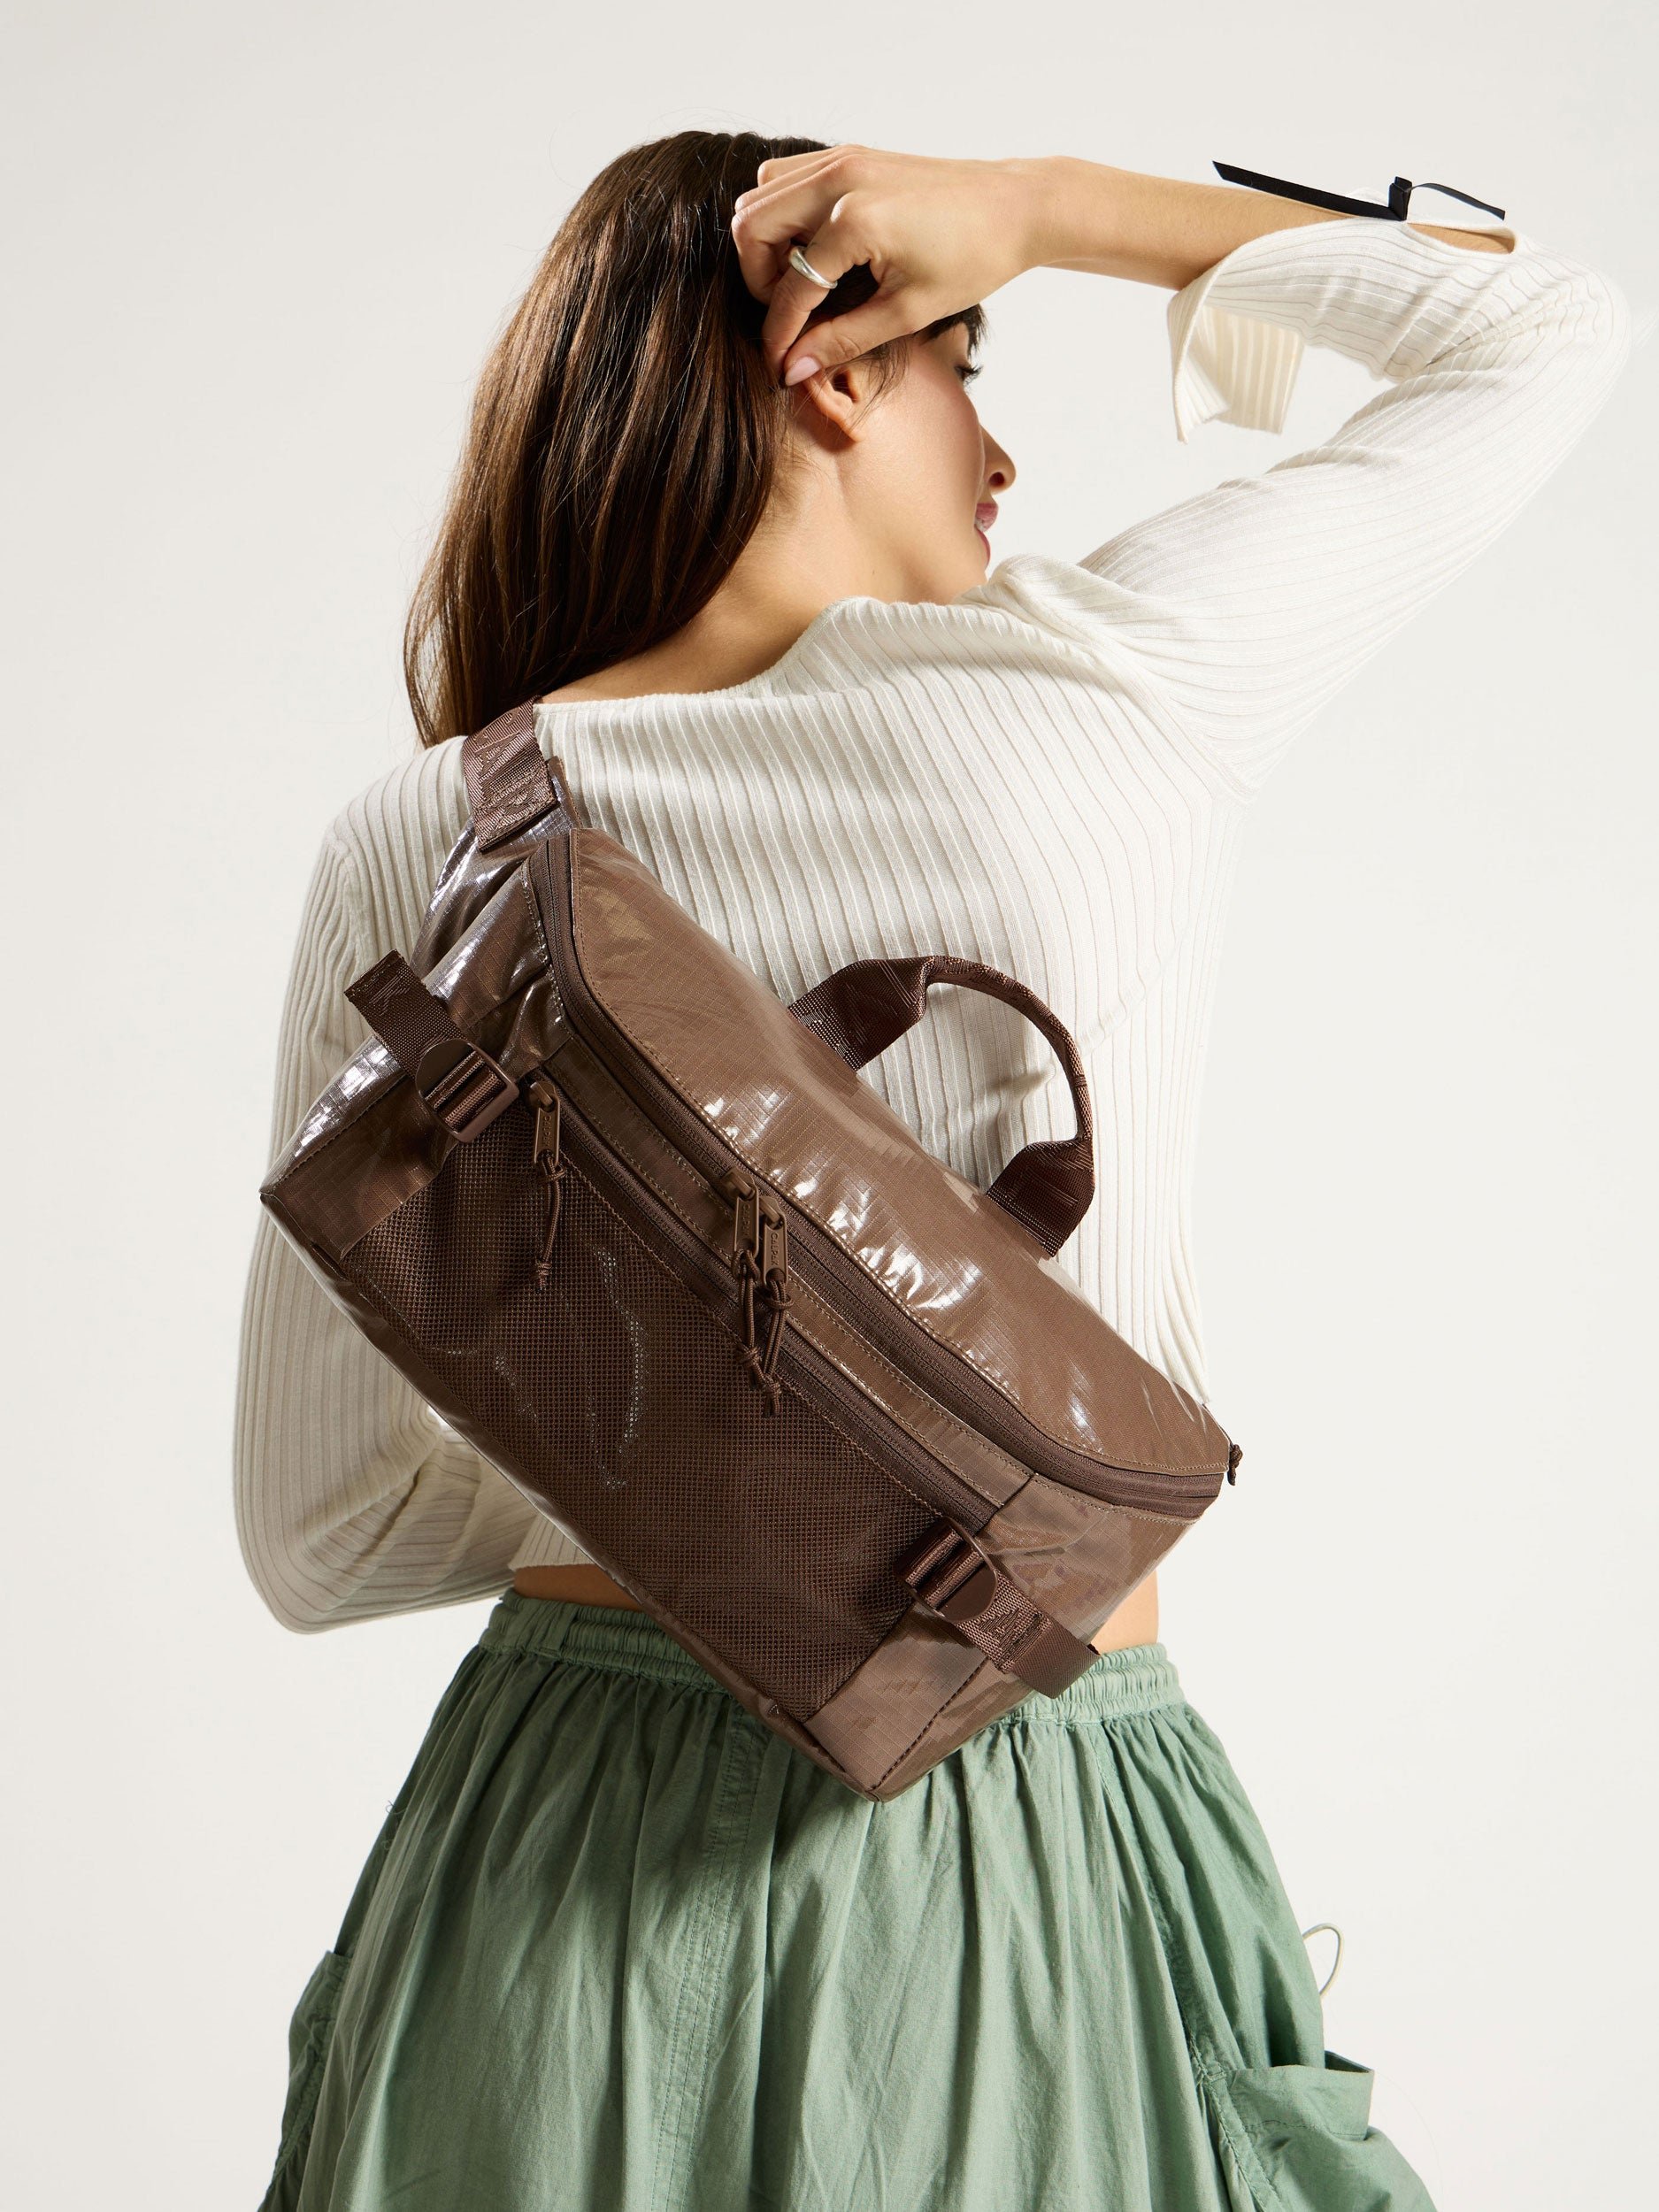 Model wearing CALPAK Terra Sling Bag in chocolate as crossbody bag